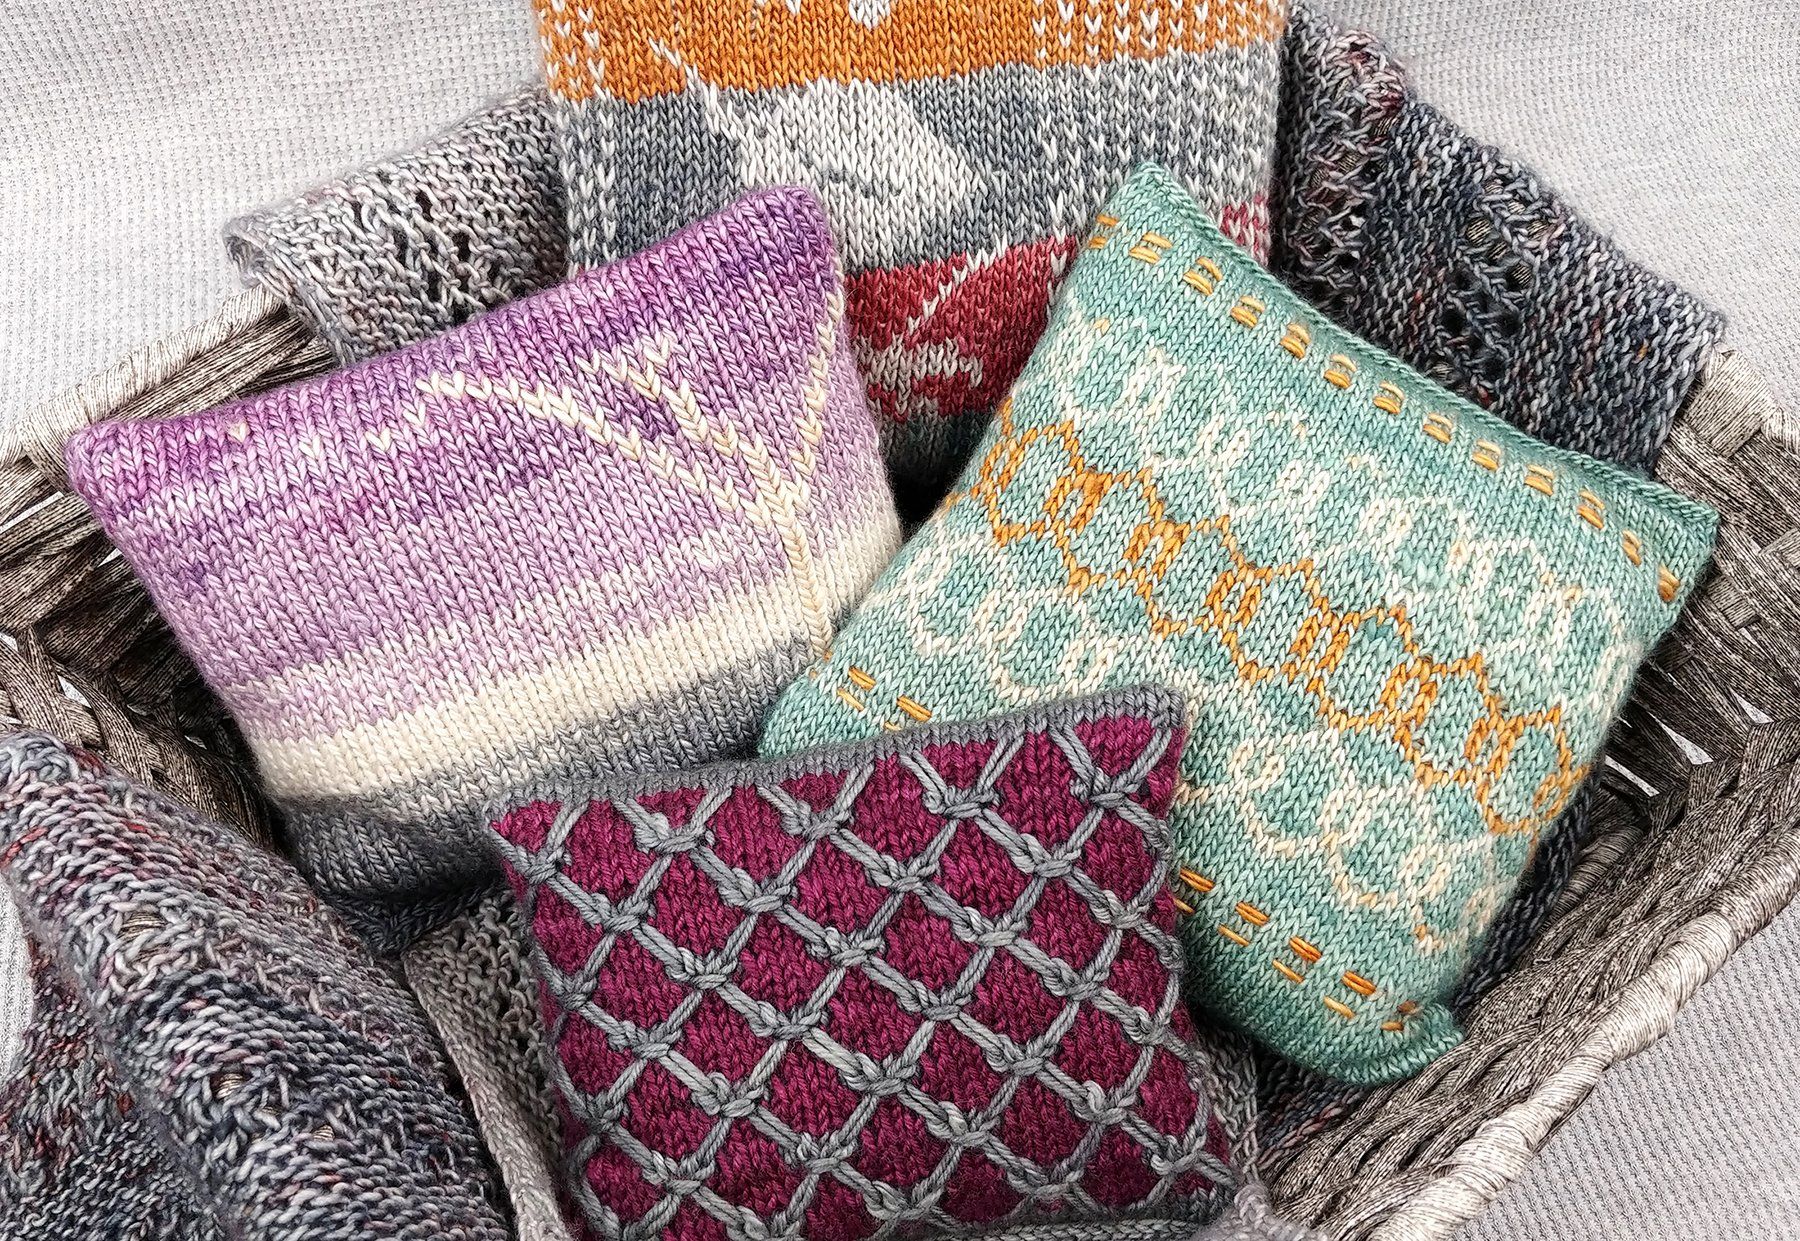 basket of knitted yarnsketch pillows made by debi martin of blue skin yarns